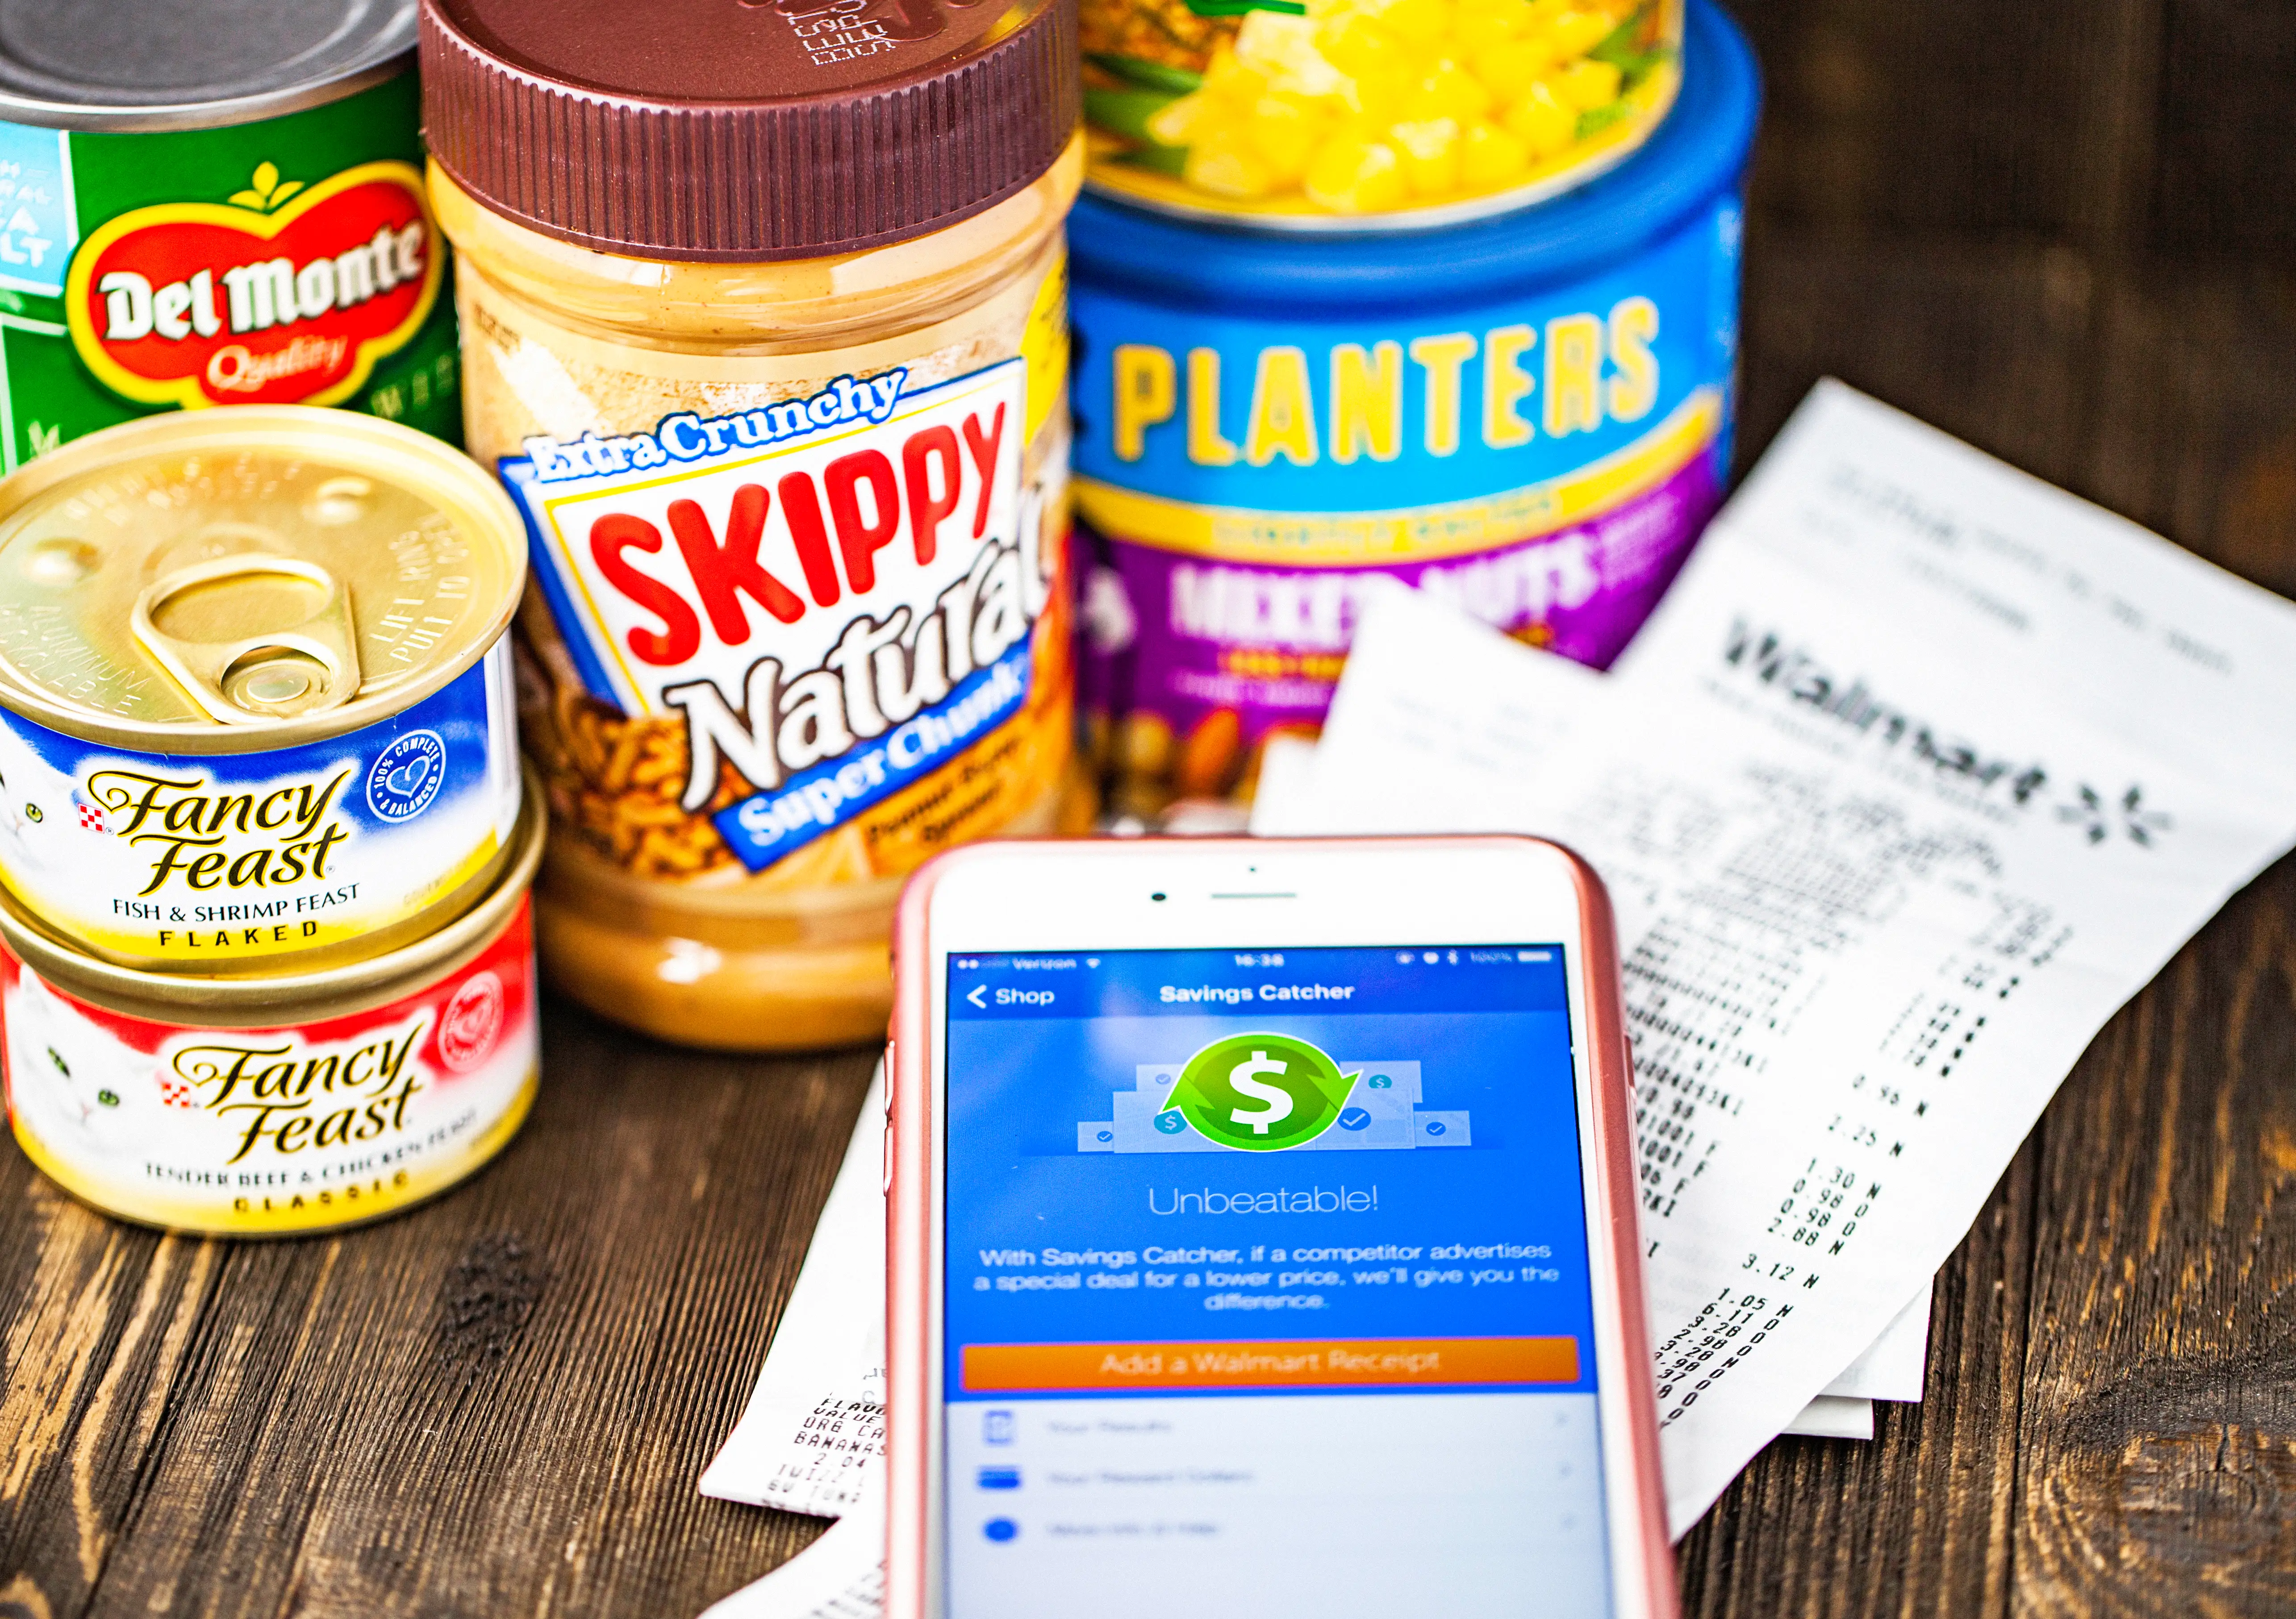 Walmart Savings Catcher App on iPhone screen and assorted groceries